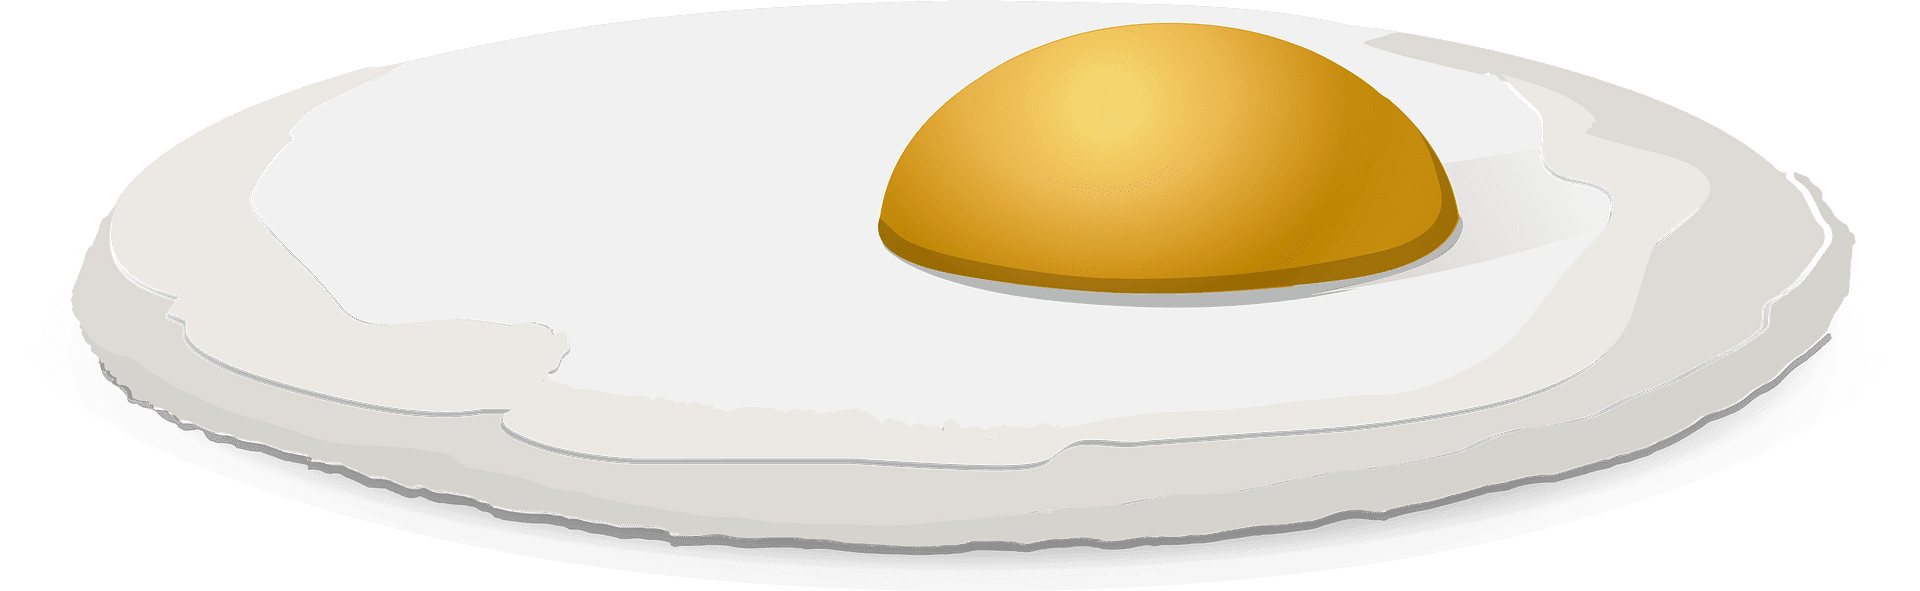 Egg Rug clipart transparent